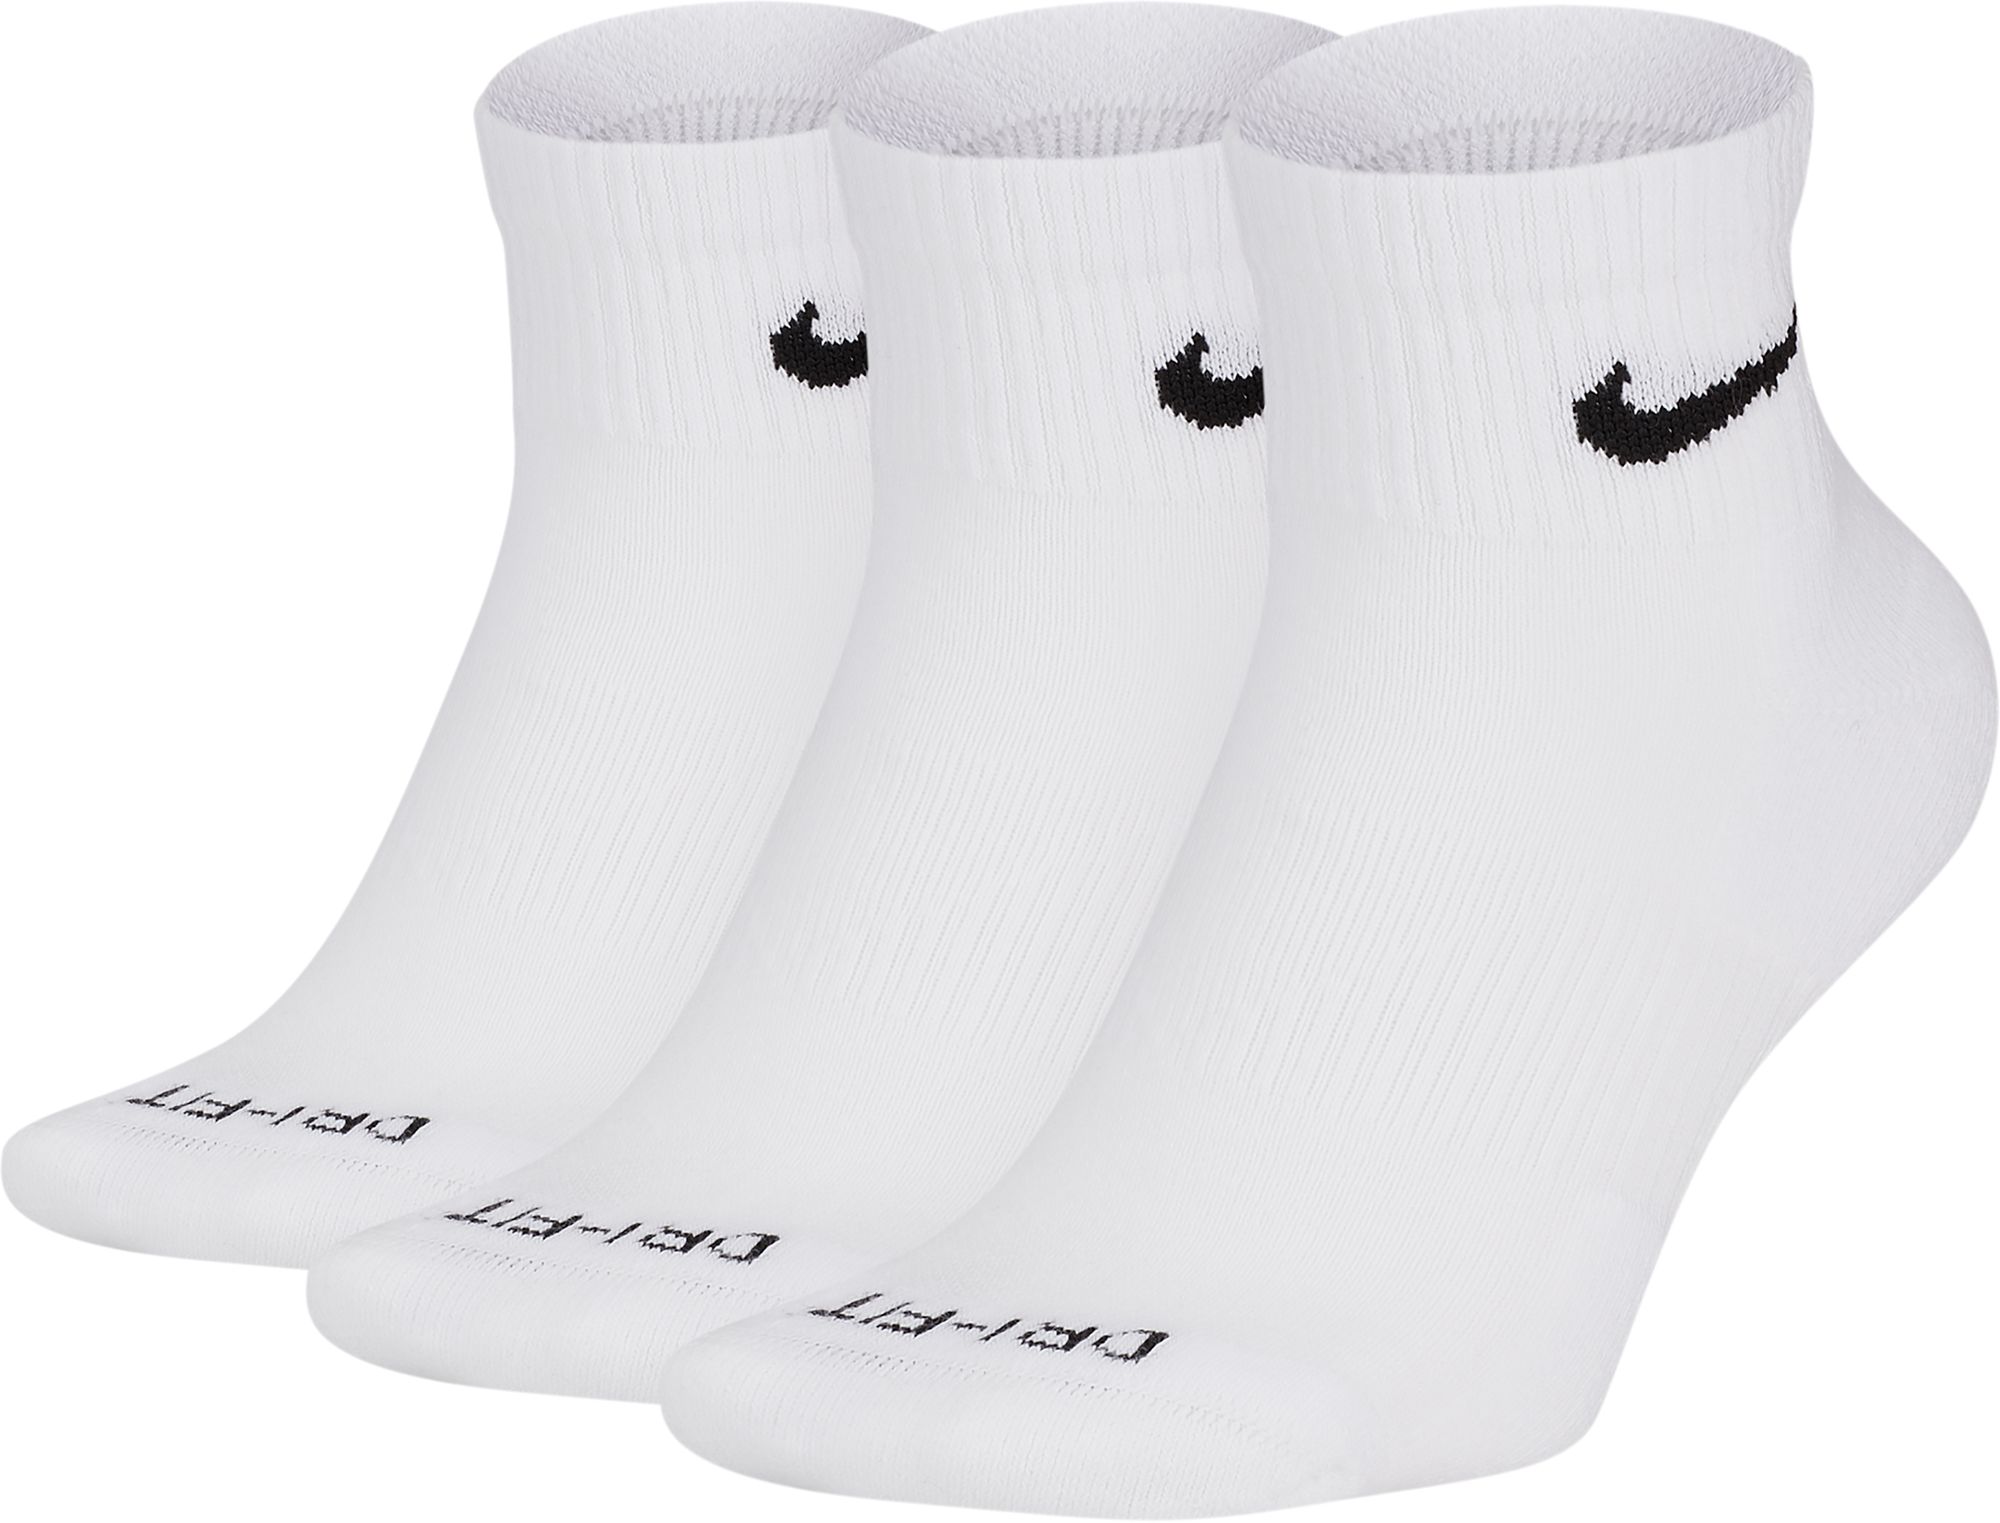 white nike ankle socks